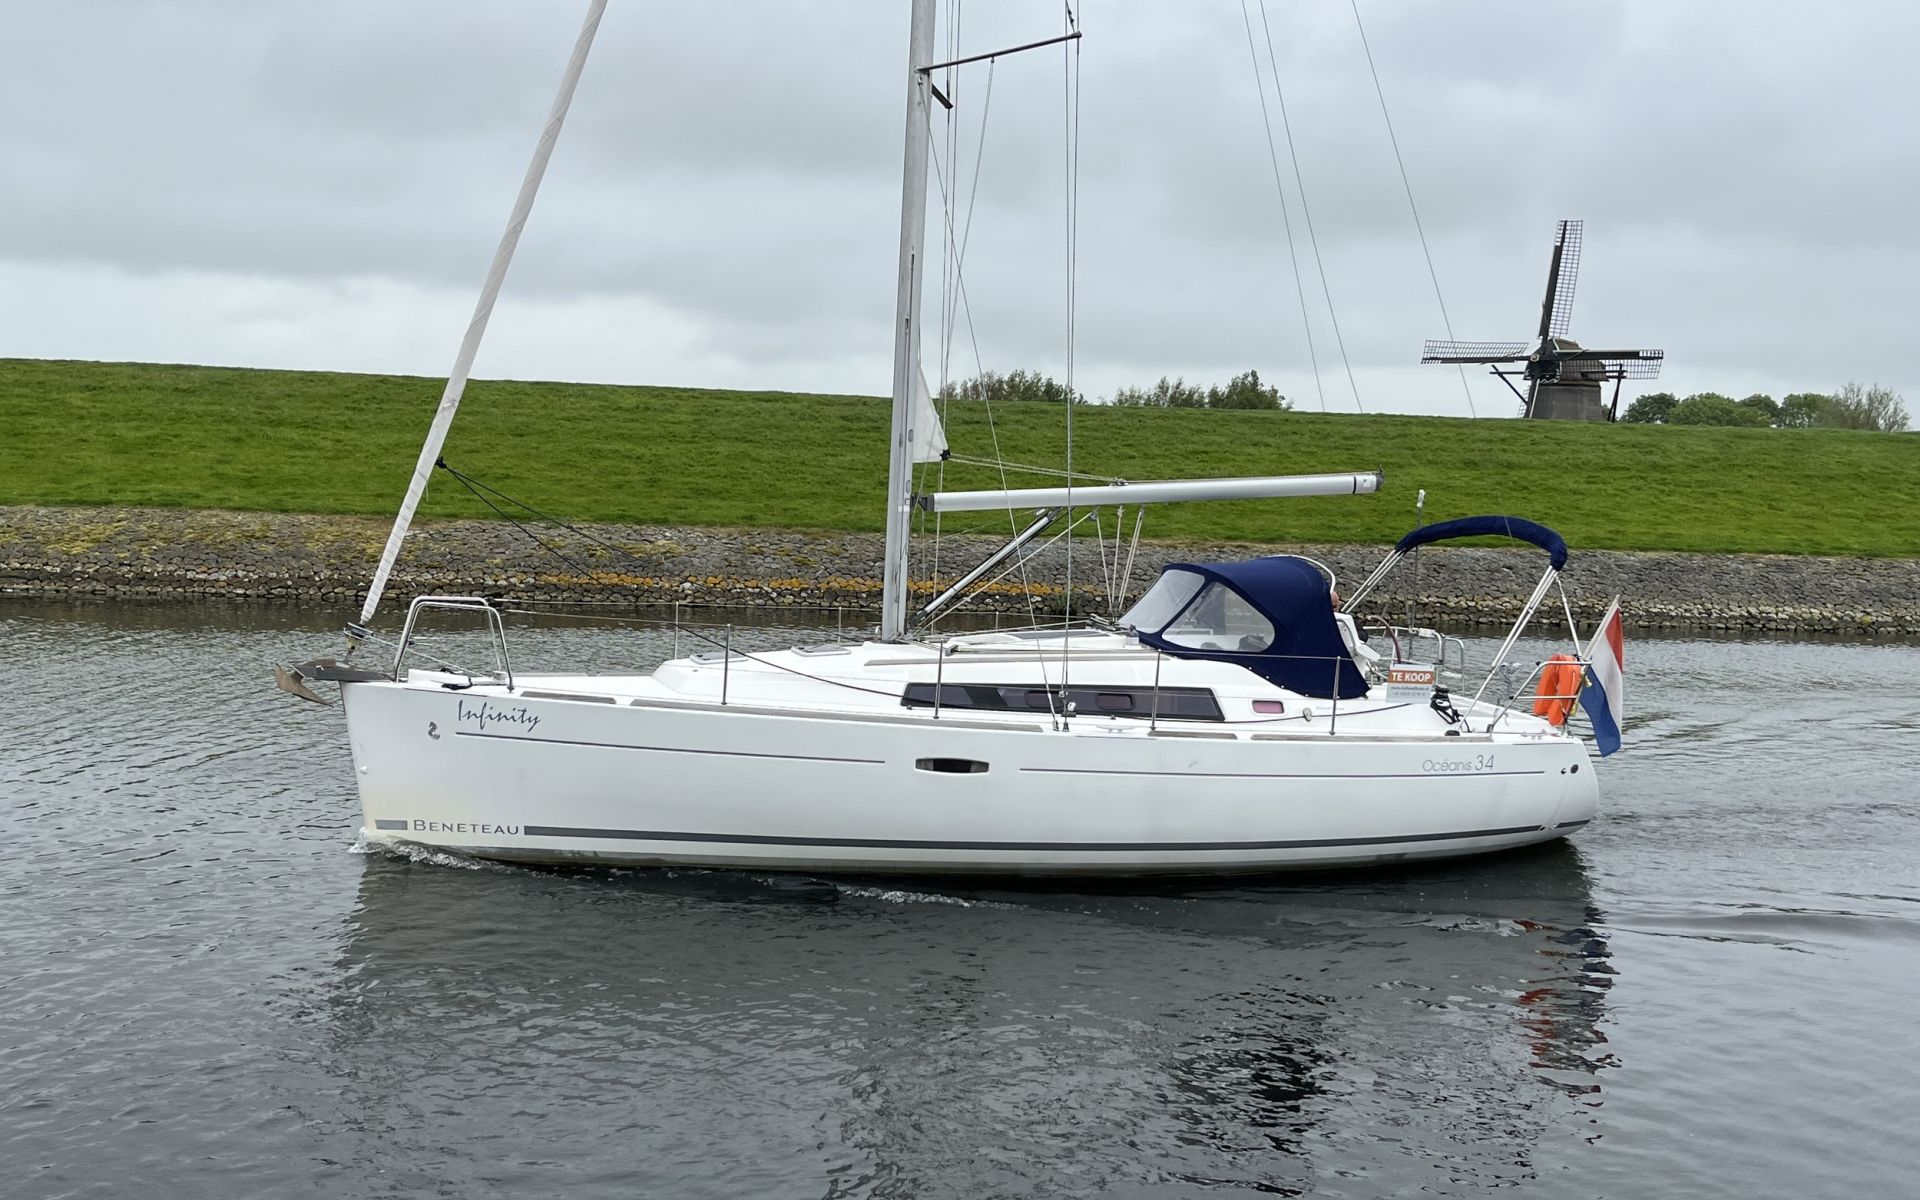 Beneteau Oceanis 34, Zeiljacht for sale by HollandBoat International Yachtbrokers